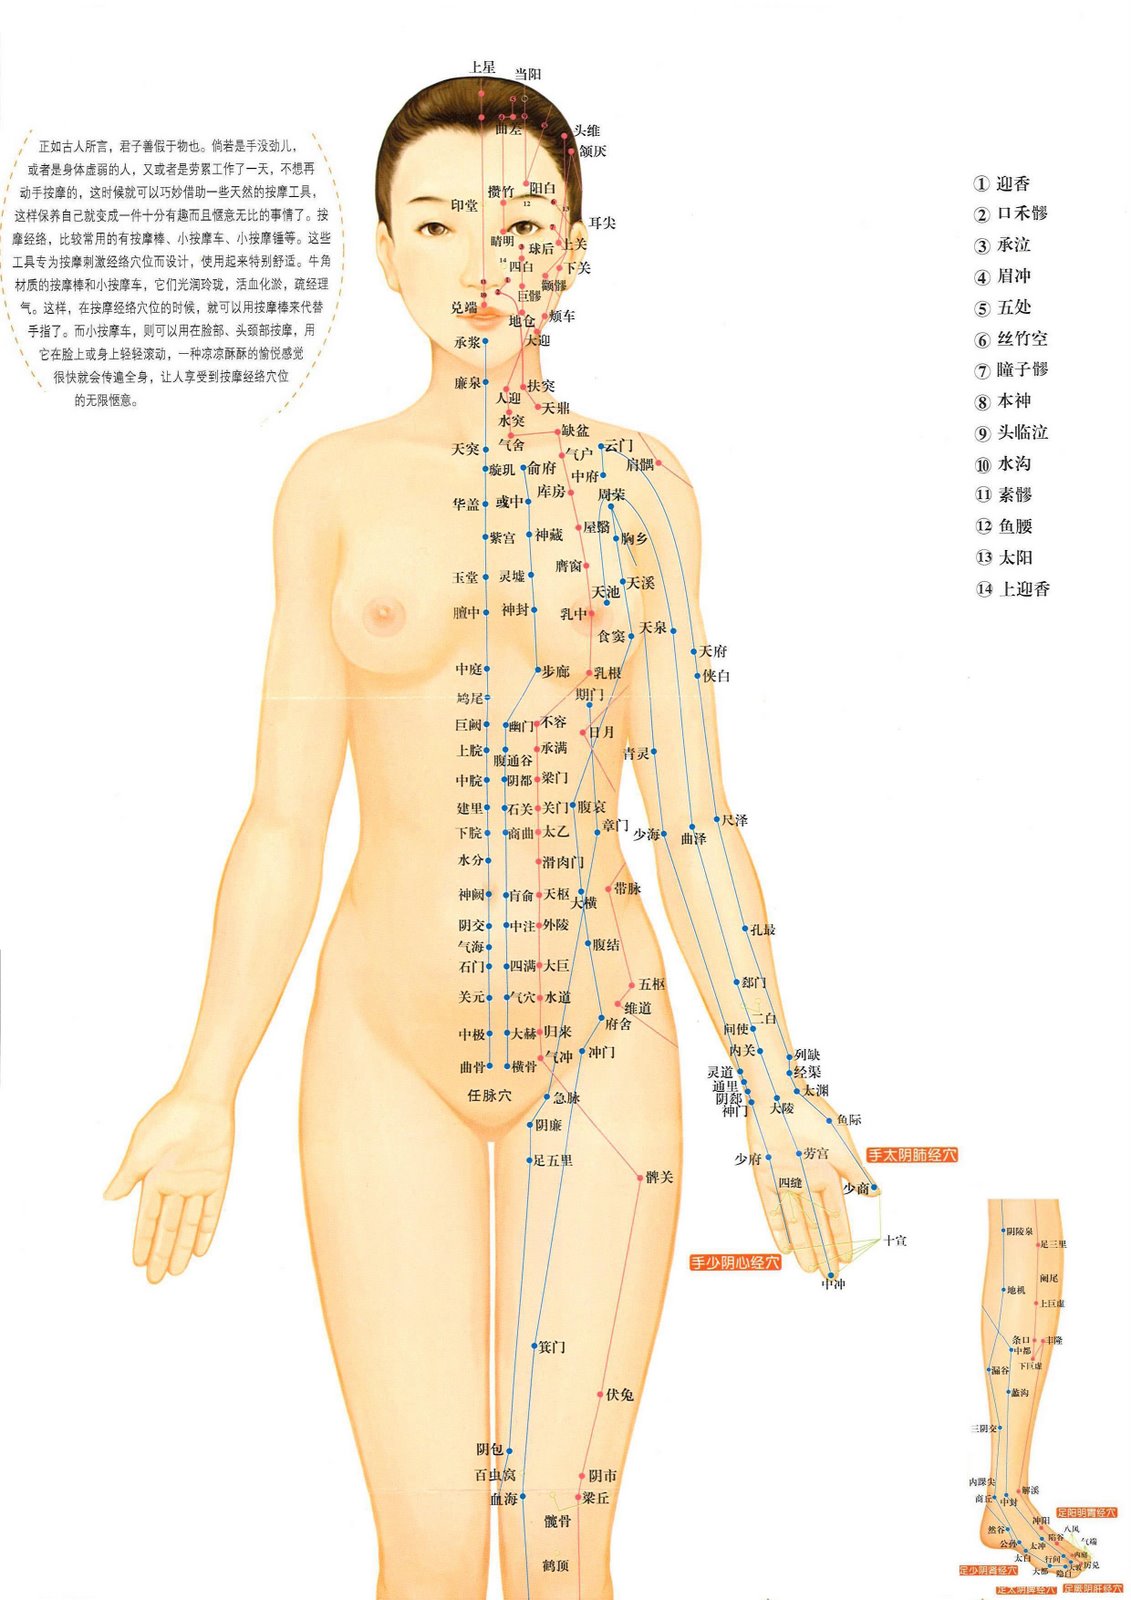 Vital signs body temperature, pulse rate, respiration 